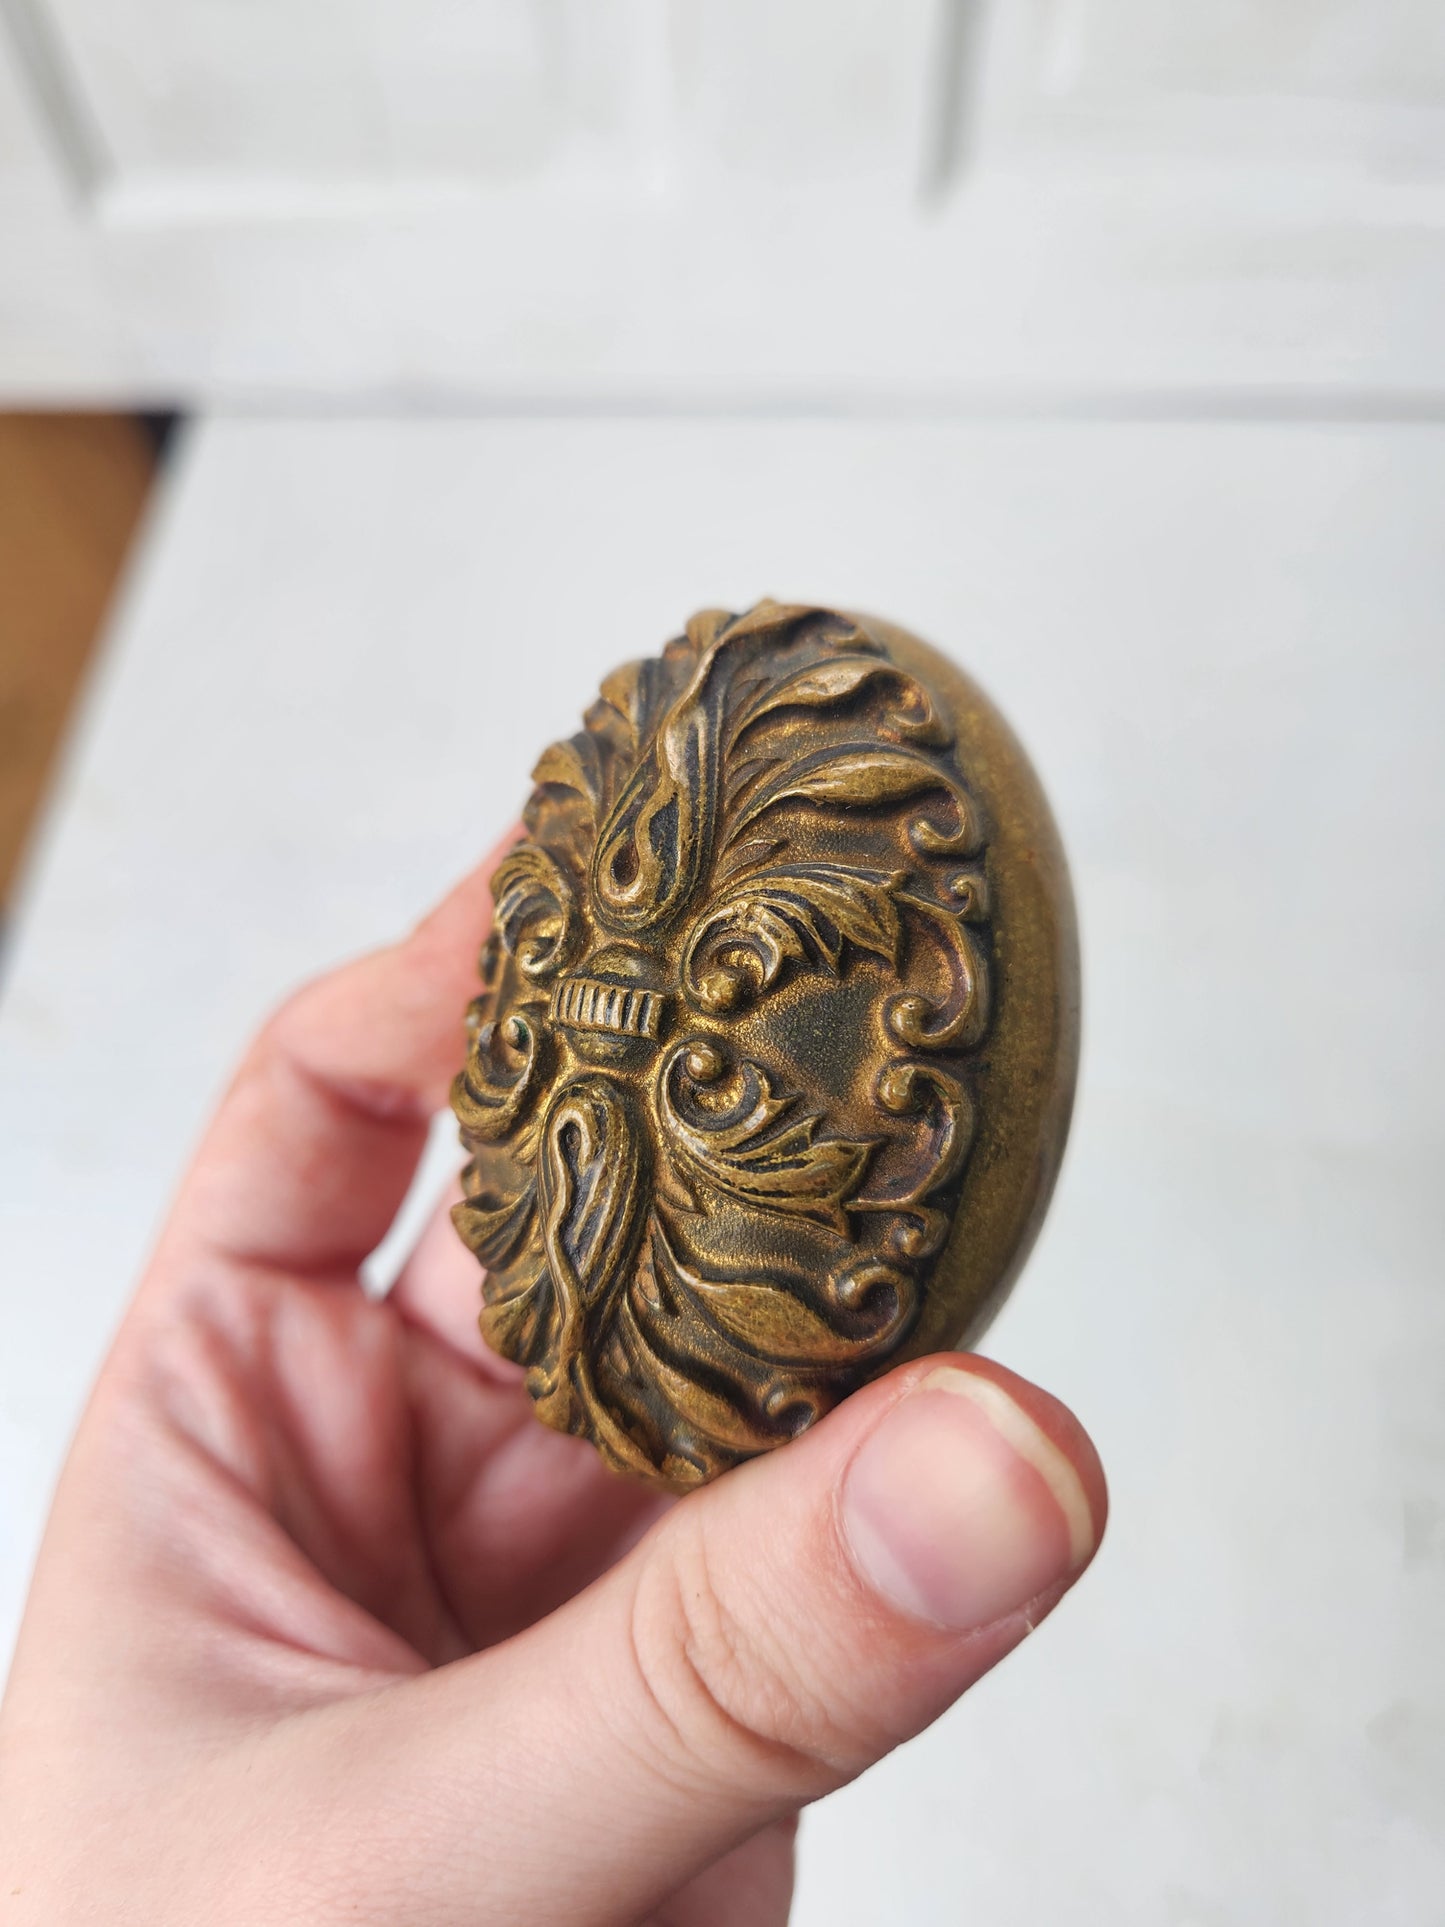 Oval Pavia Design Doorknob by Corbin Hardware, Antique Oval Bronze Knob c. 1905 092105